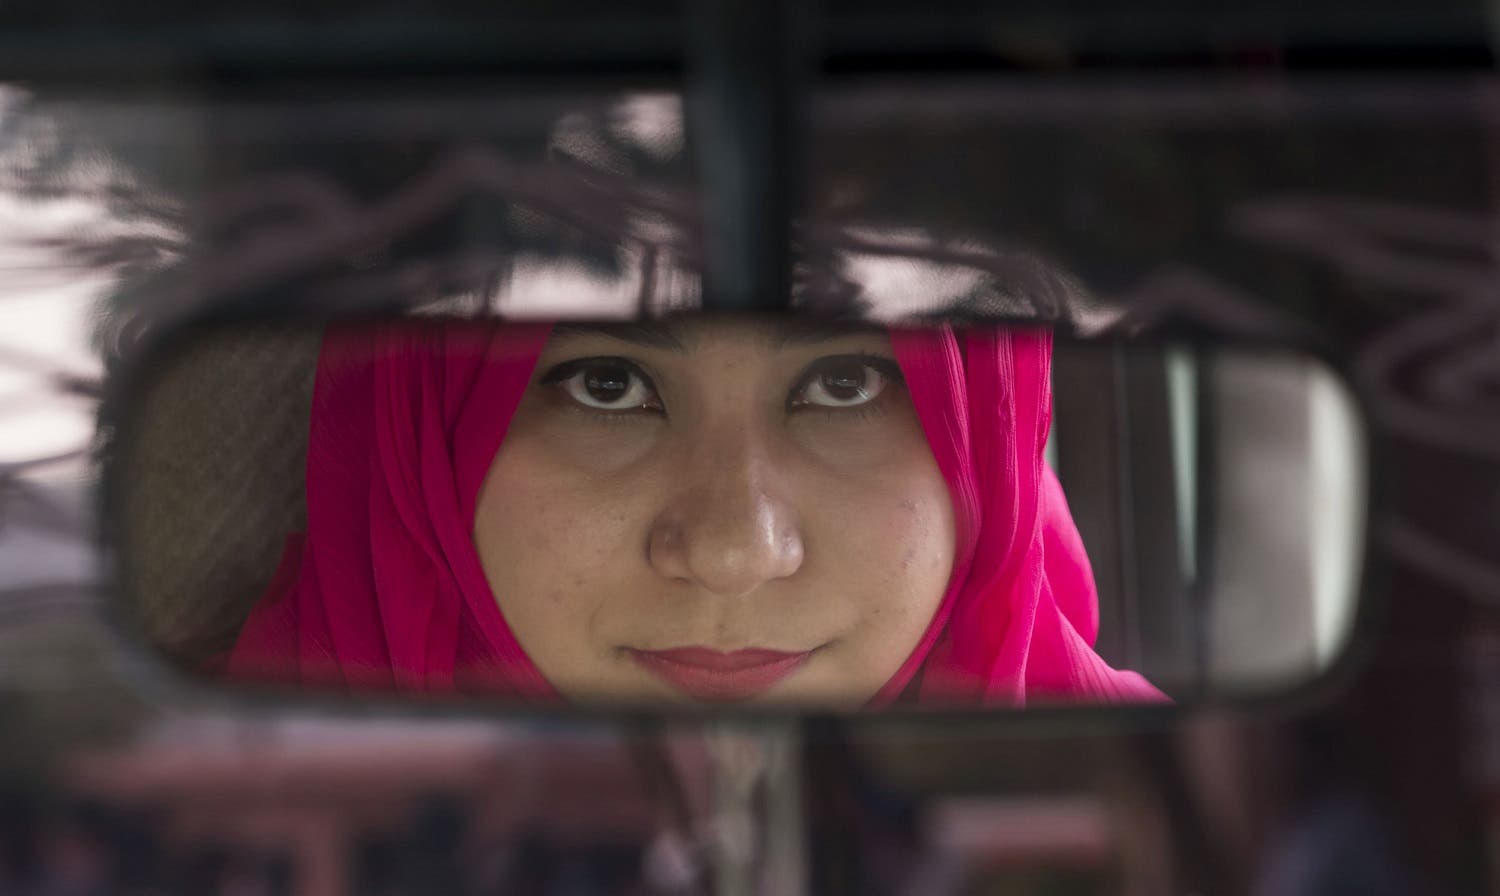 Women-only pink taxis set to hit Pakistani streets Al Arabiya English pic